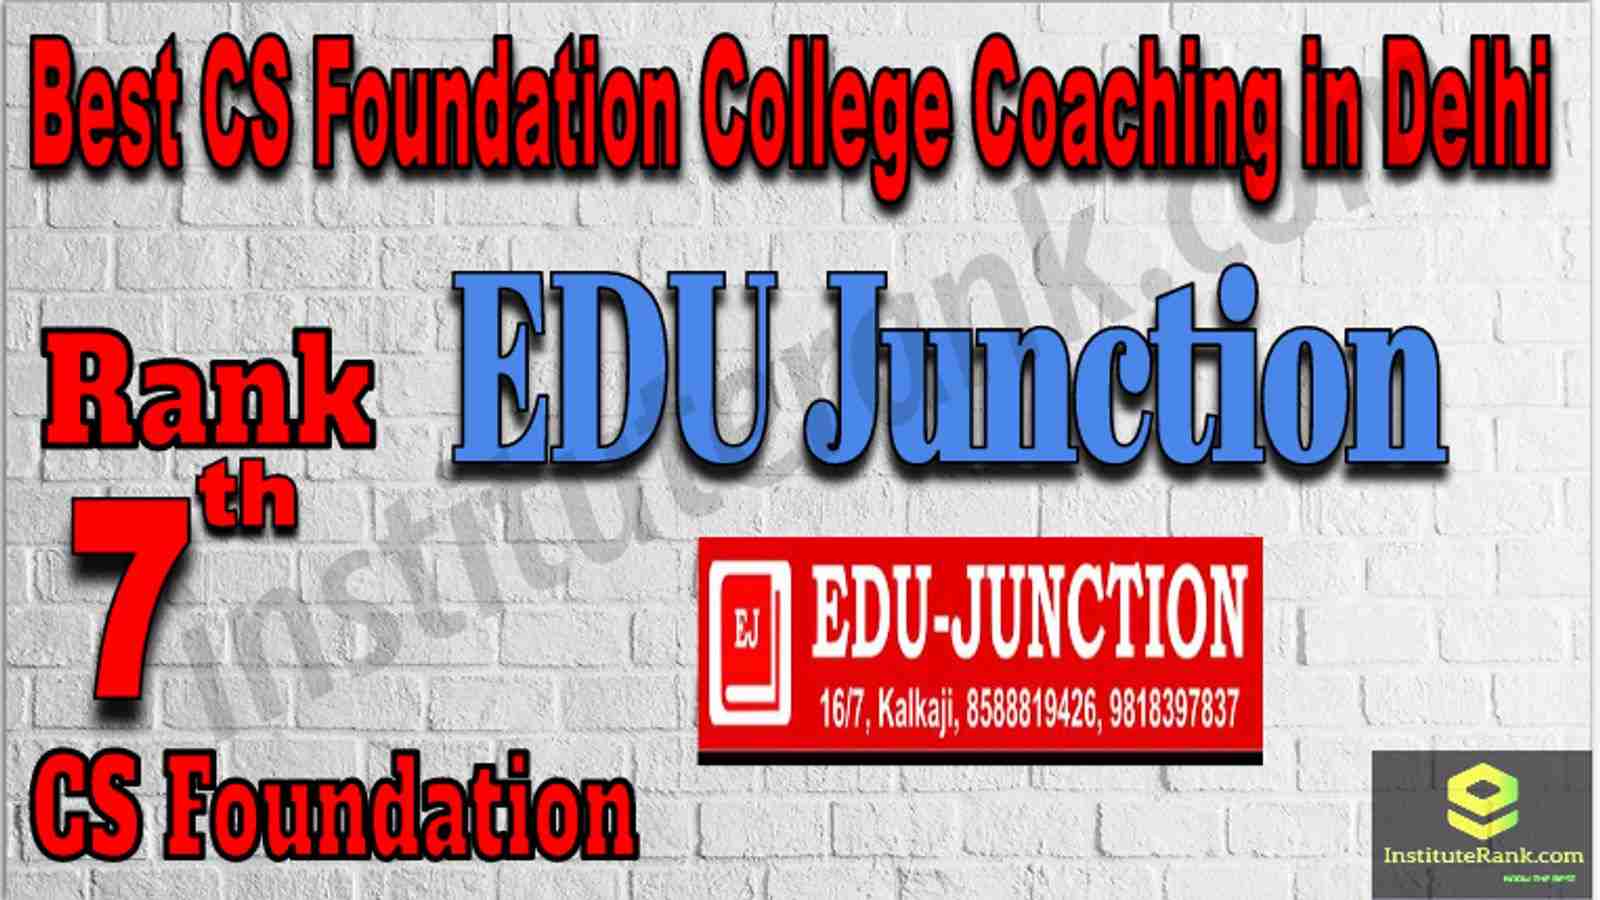 Rank7 Best CS Foundation College Coaching in Delhi